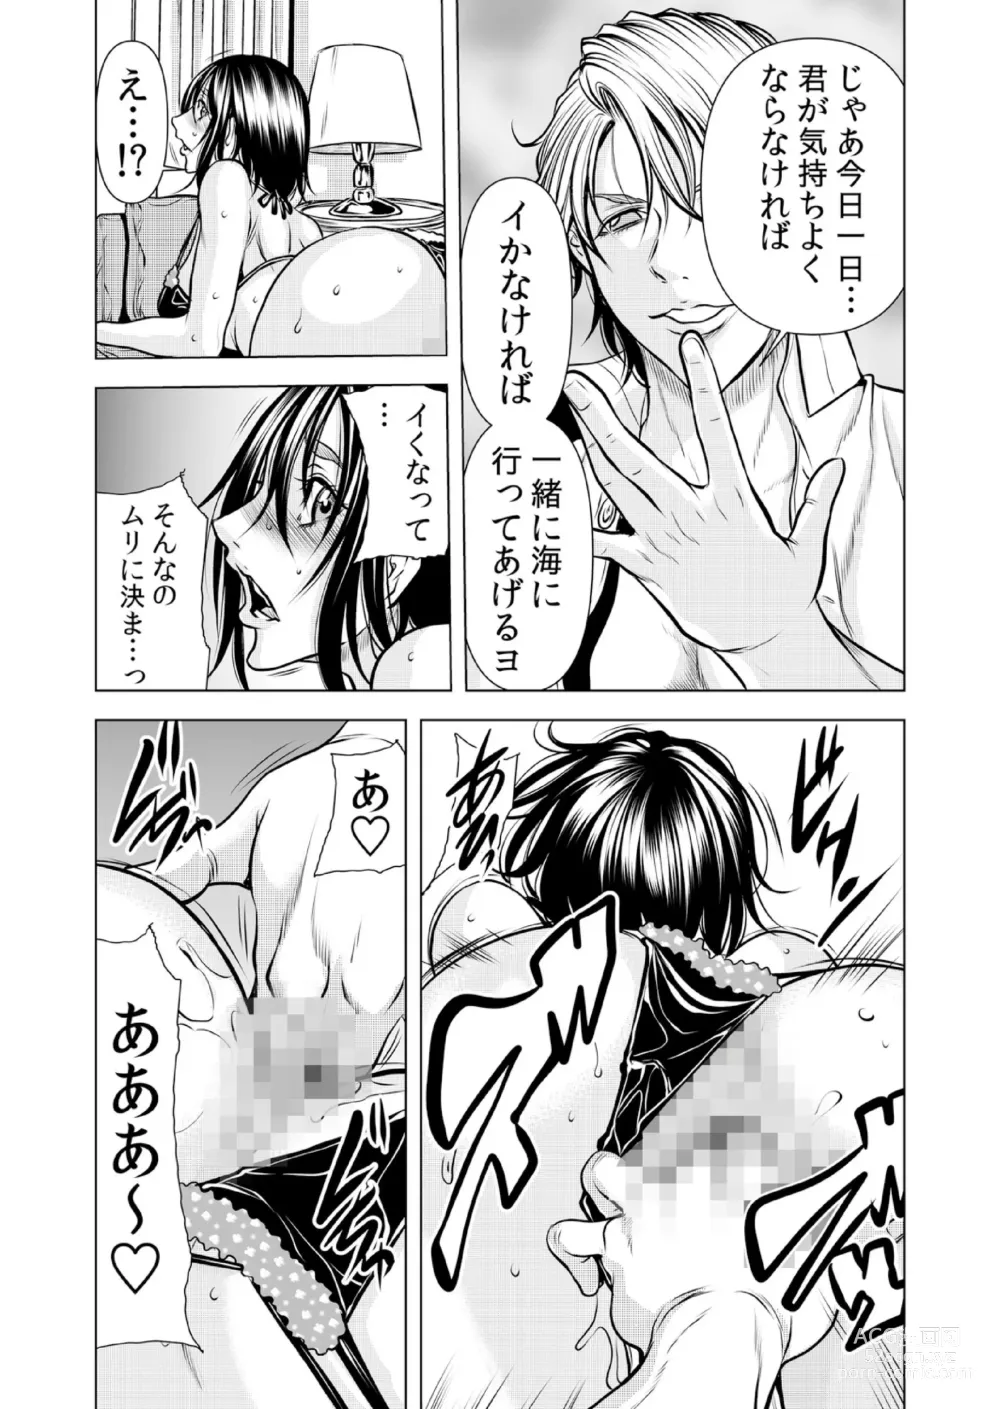 Page 8 of manga Mamasan,yobai ha OK desuka? VOL11